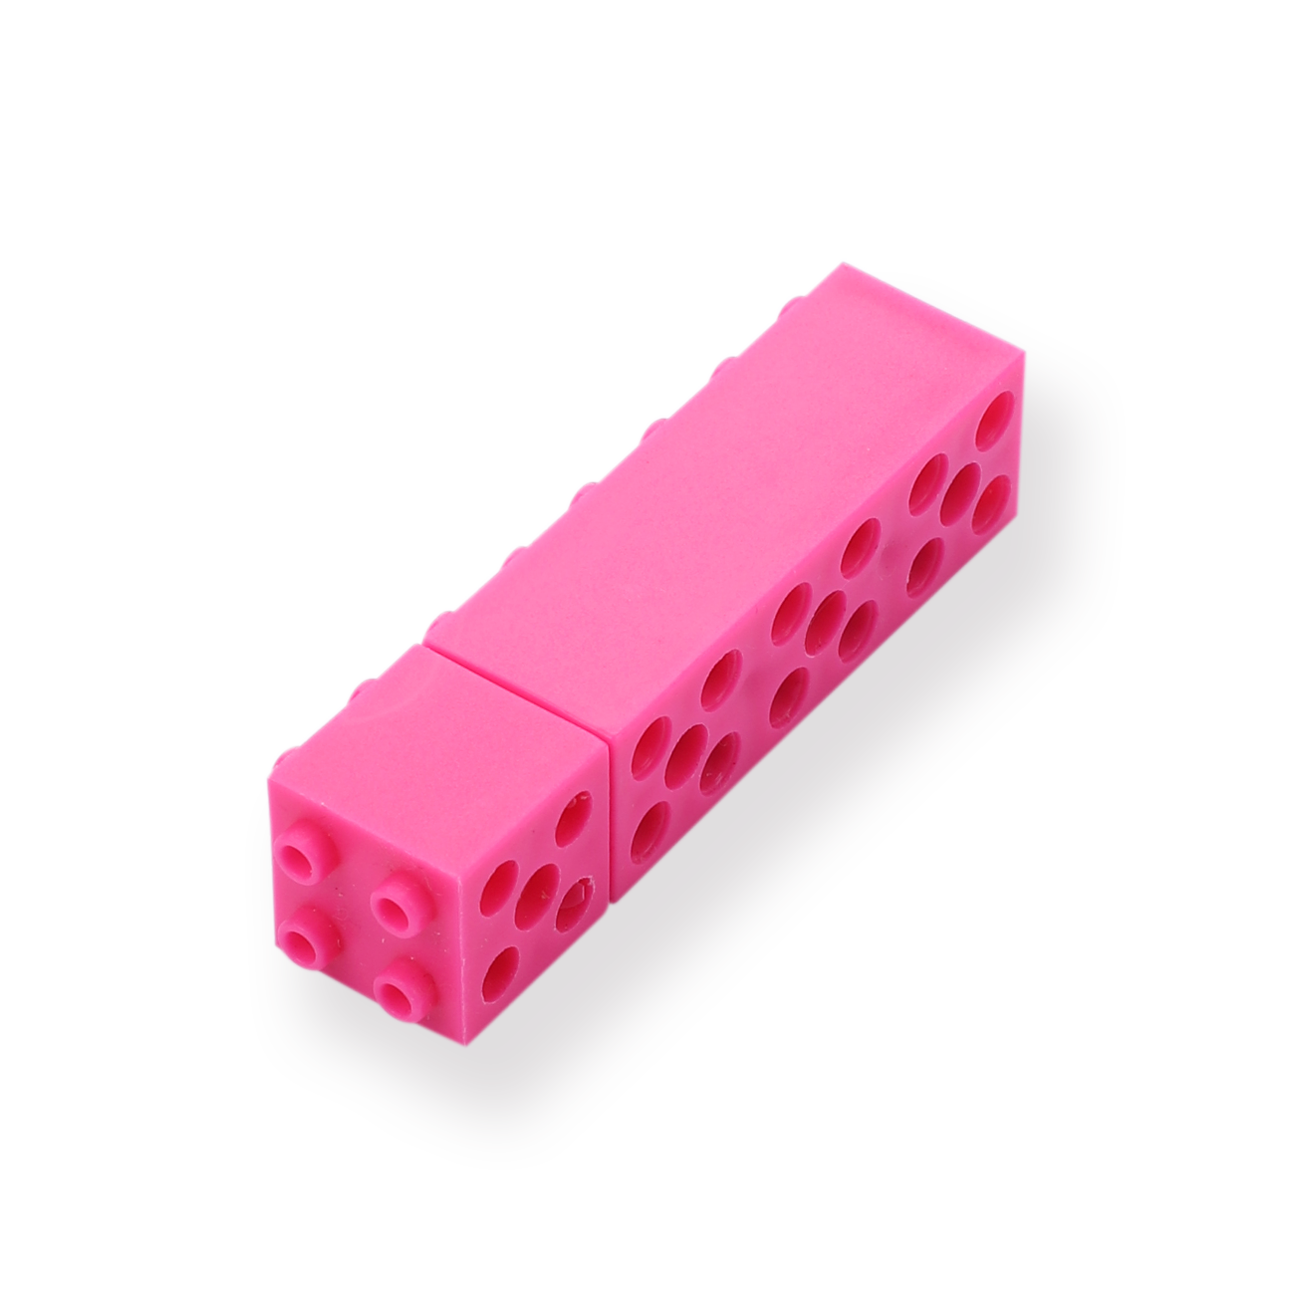 Building Block Highlighter - Pink - Stationery Pal